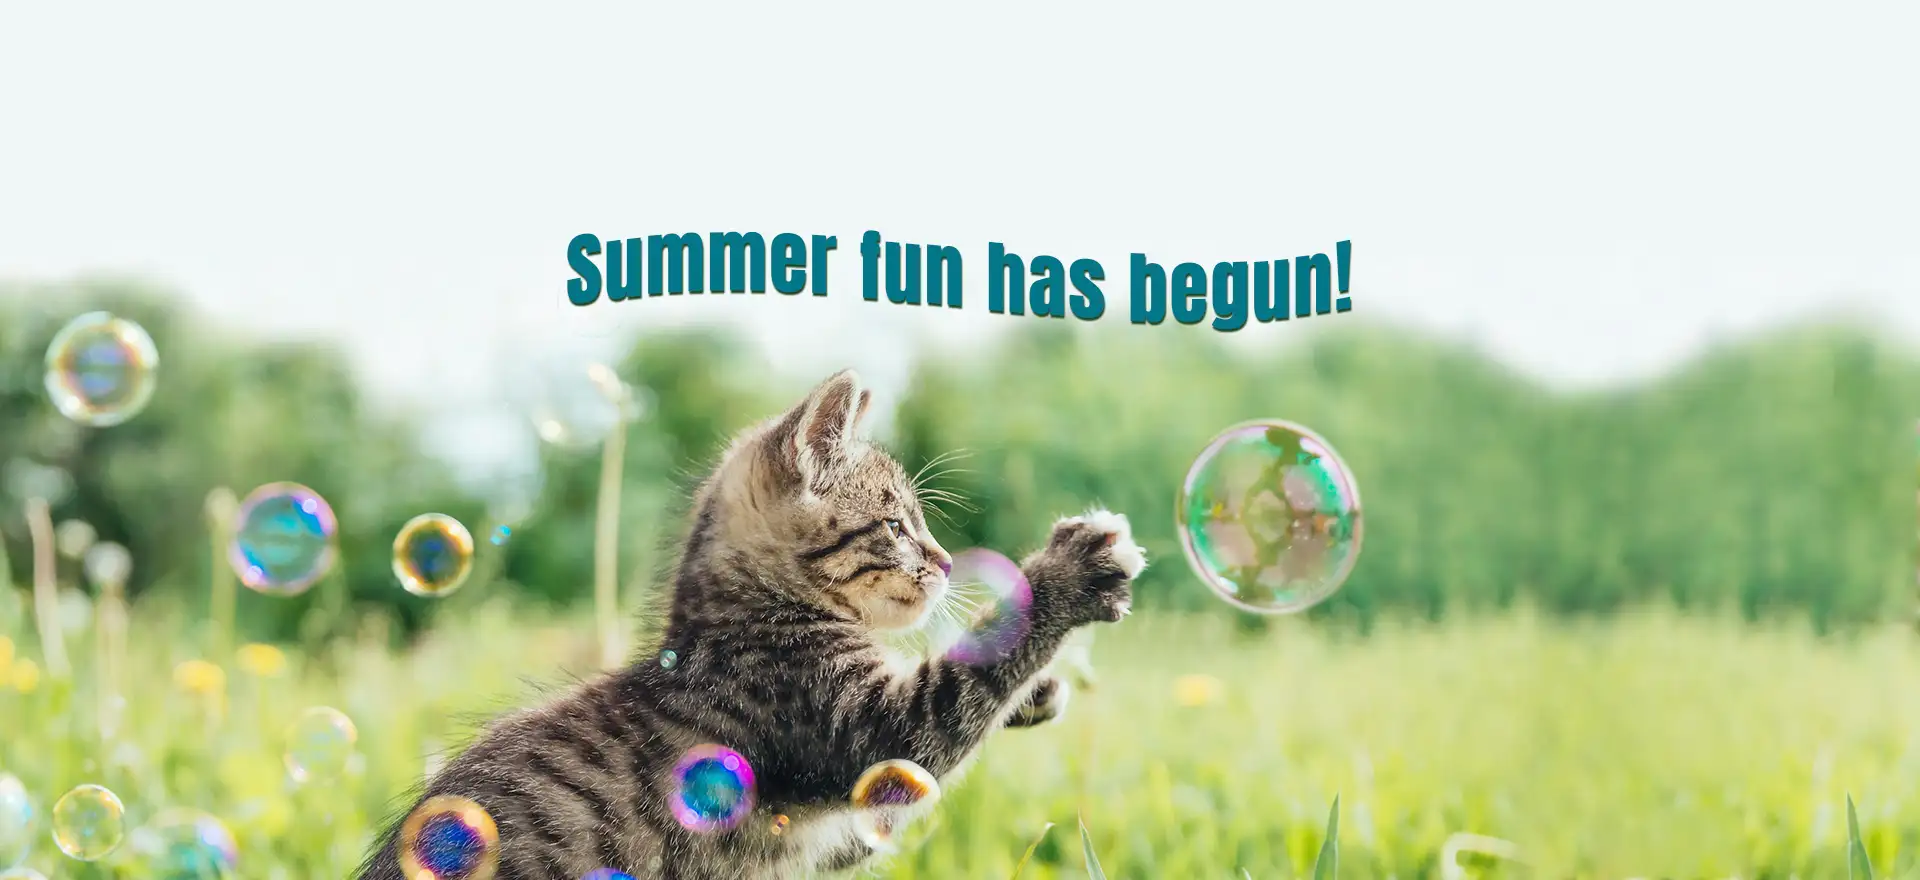 Summer fun has begun!